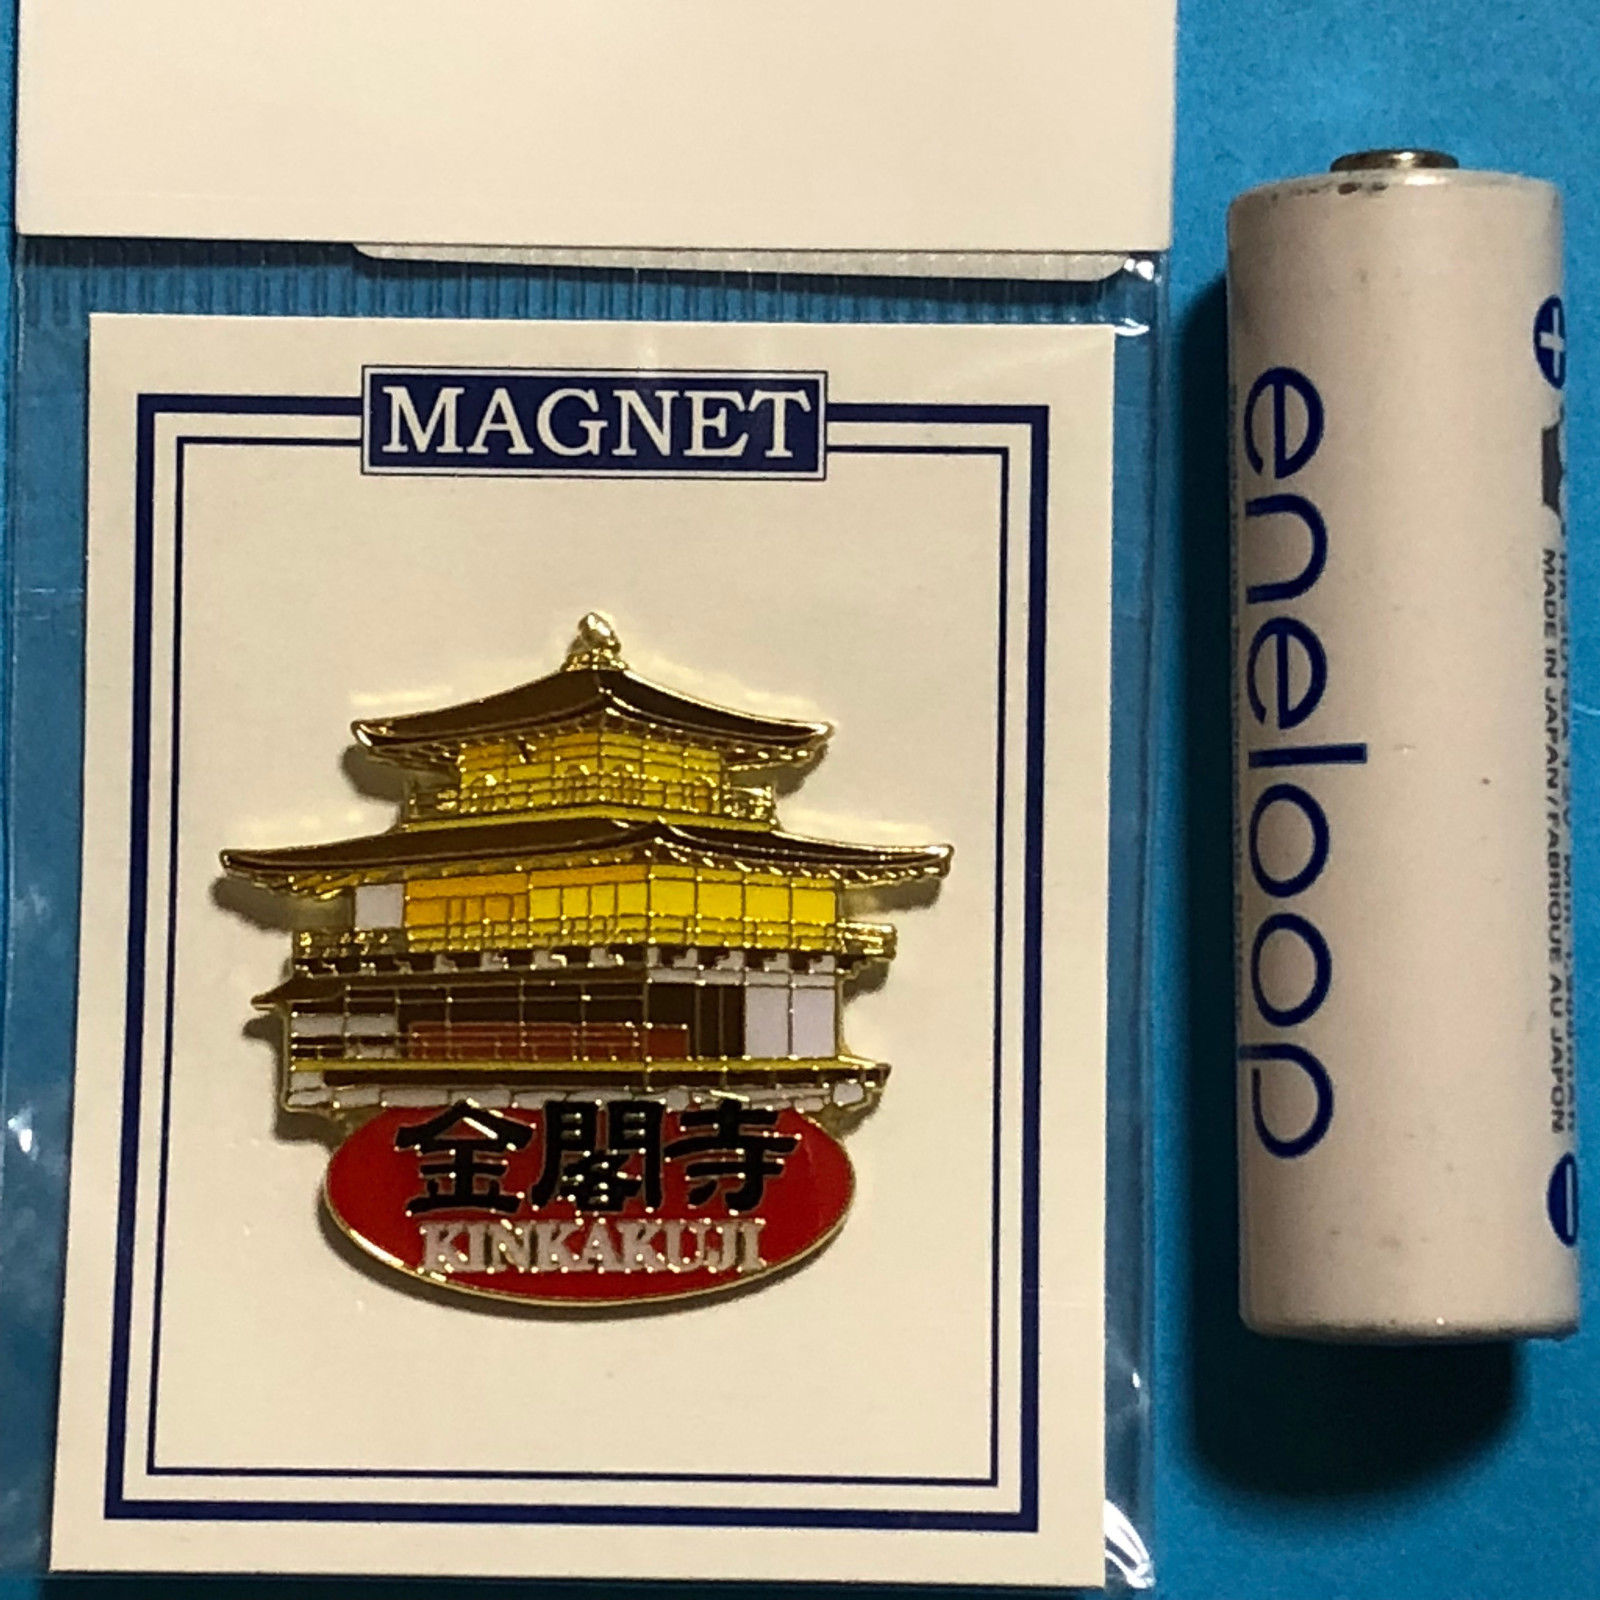 Kyoto Kinkakuji Temple Metal Fridge Magnet Red from Kyoto Japan 